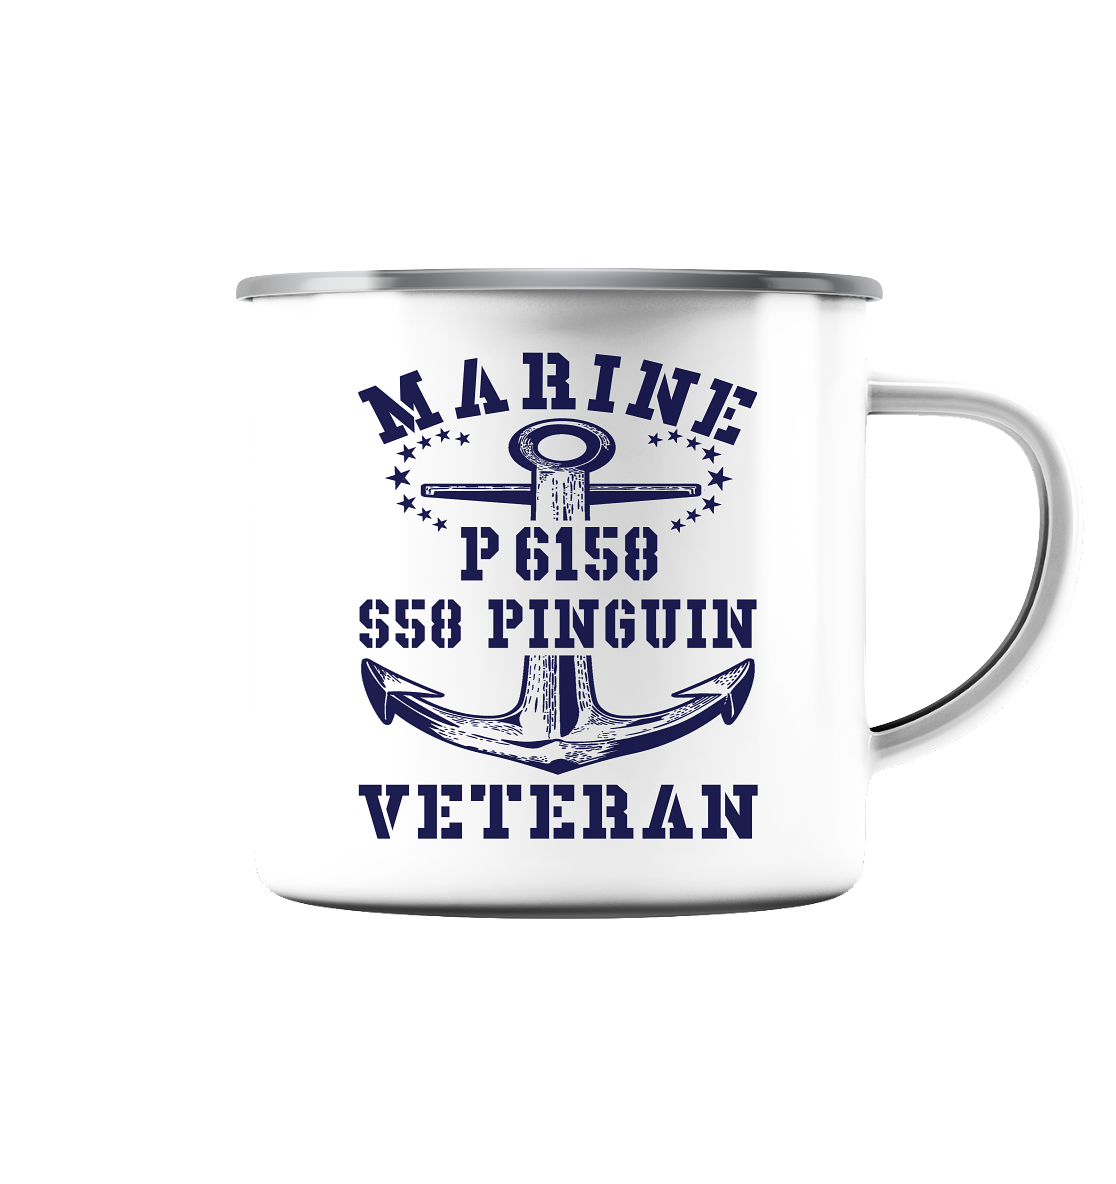 P6158 S58 PINGUIN Marine Veteran - Emaille Tasse (Silber)